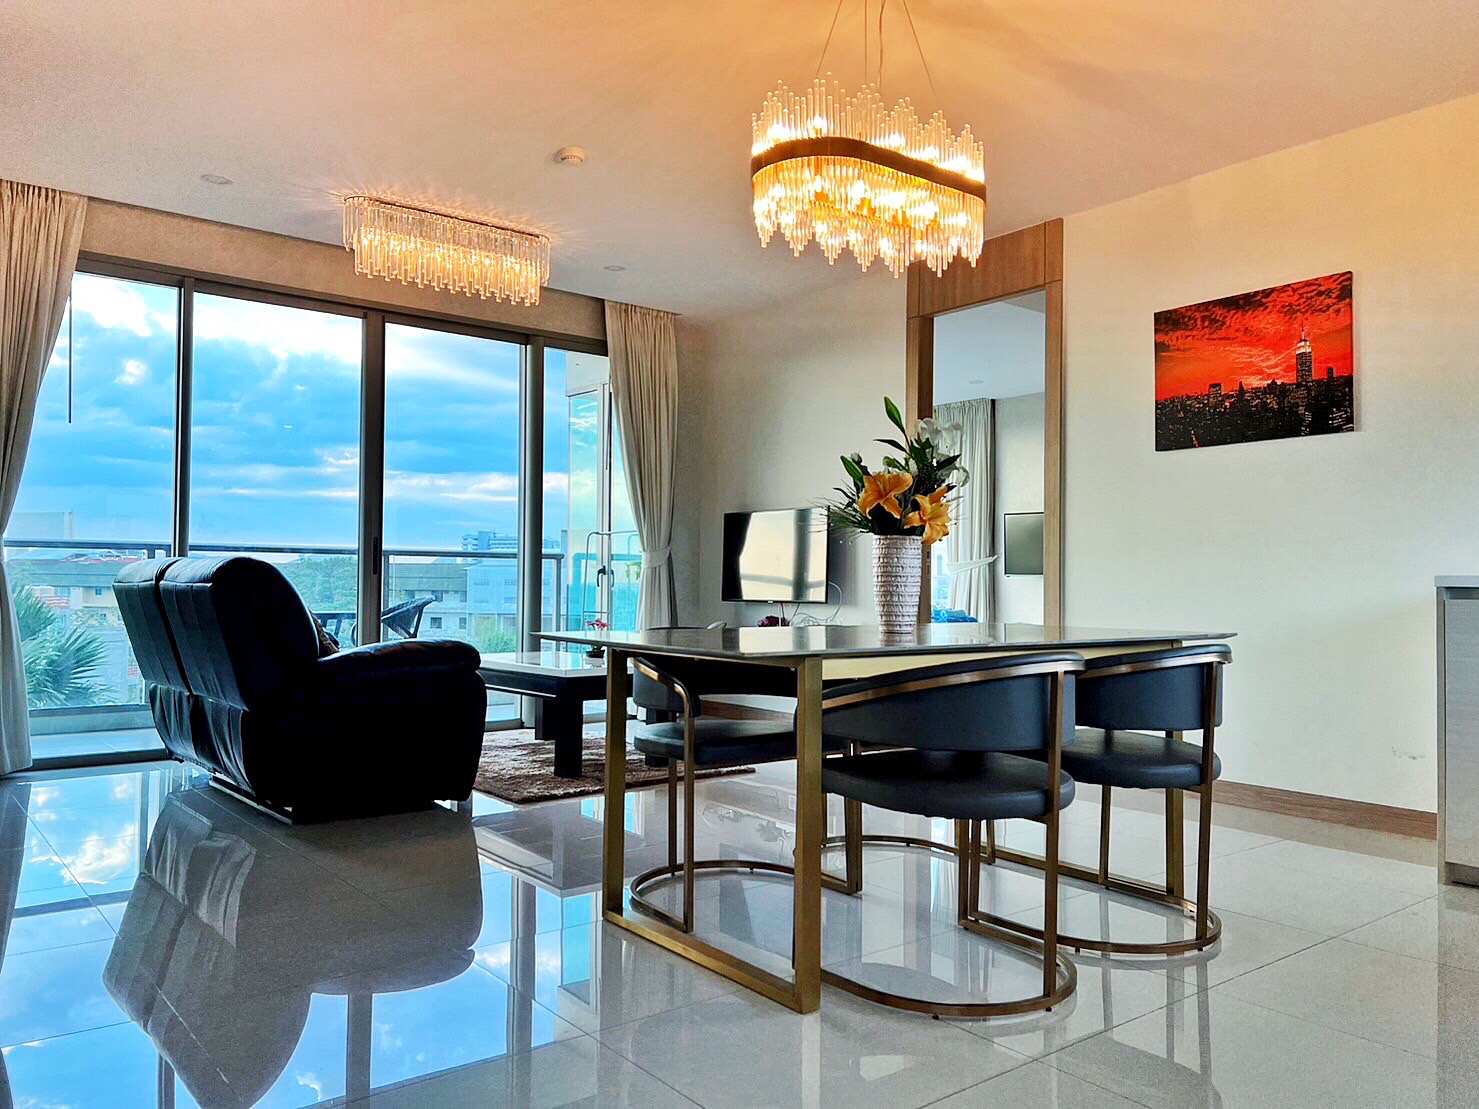 R136 Riviera Jomtien 2 bedroom 86 sqm Rental Price 50,000 baht